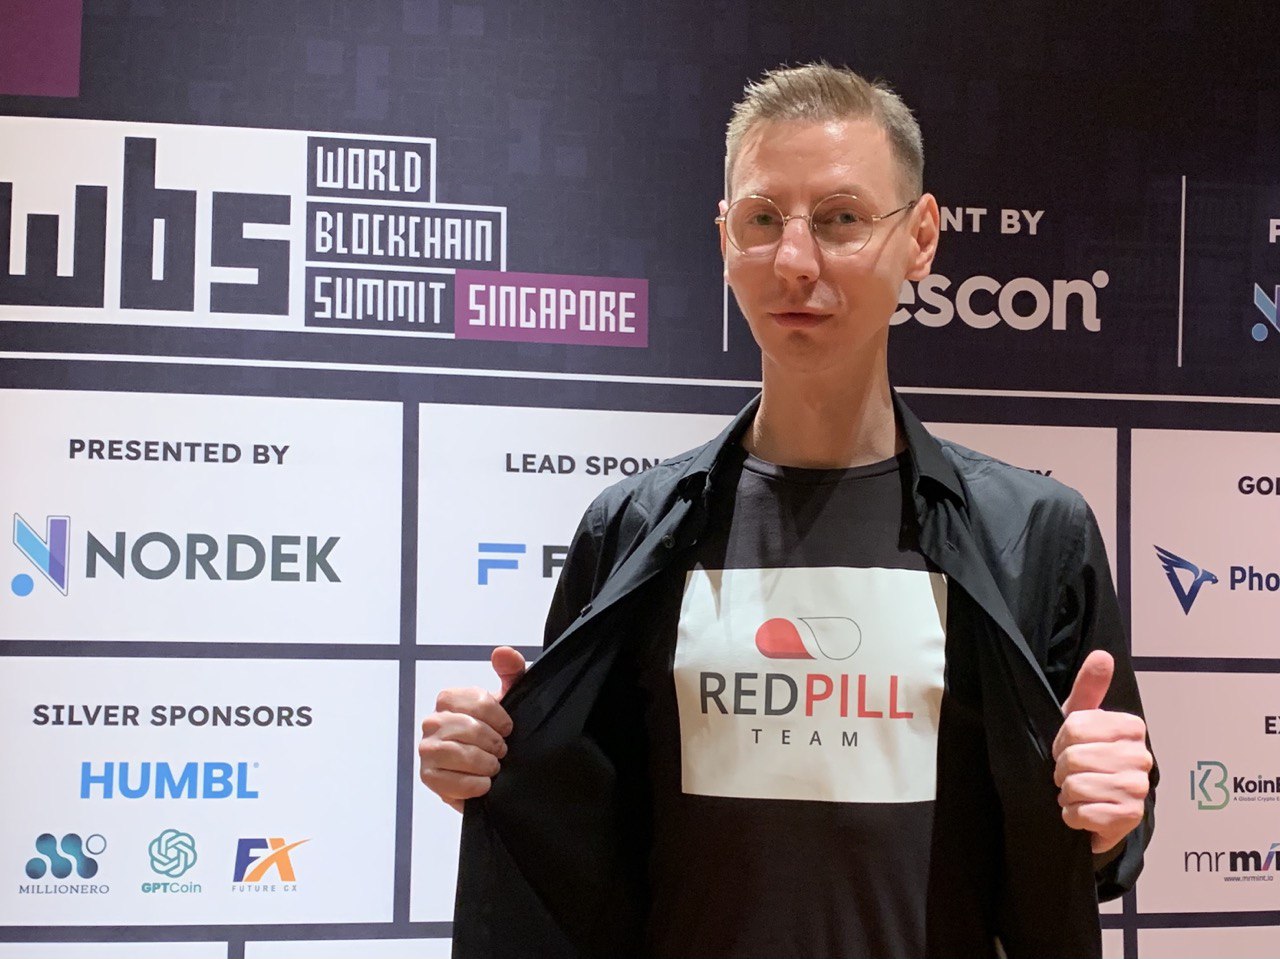 RedPill Team at World Blockchain Summit in Singapor